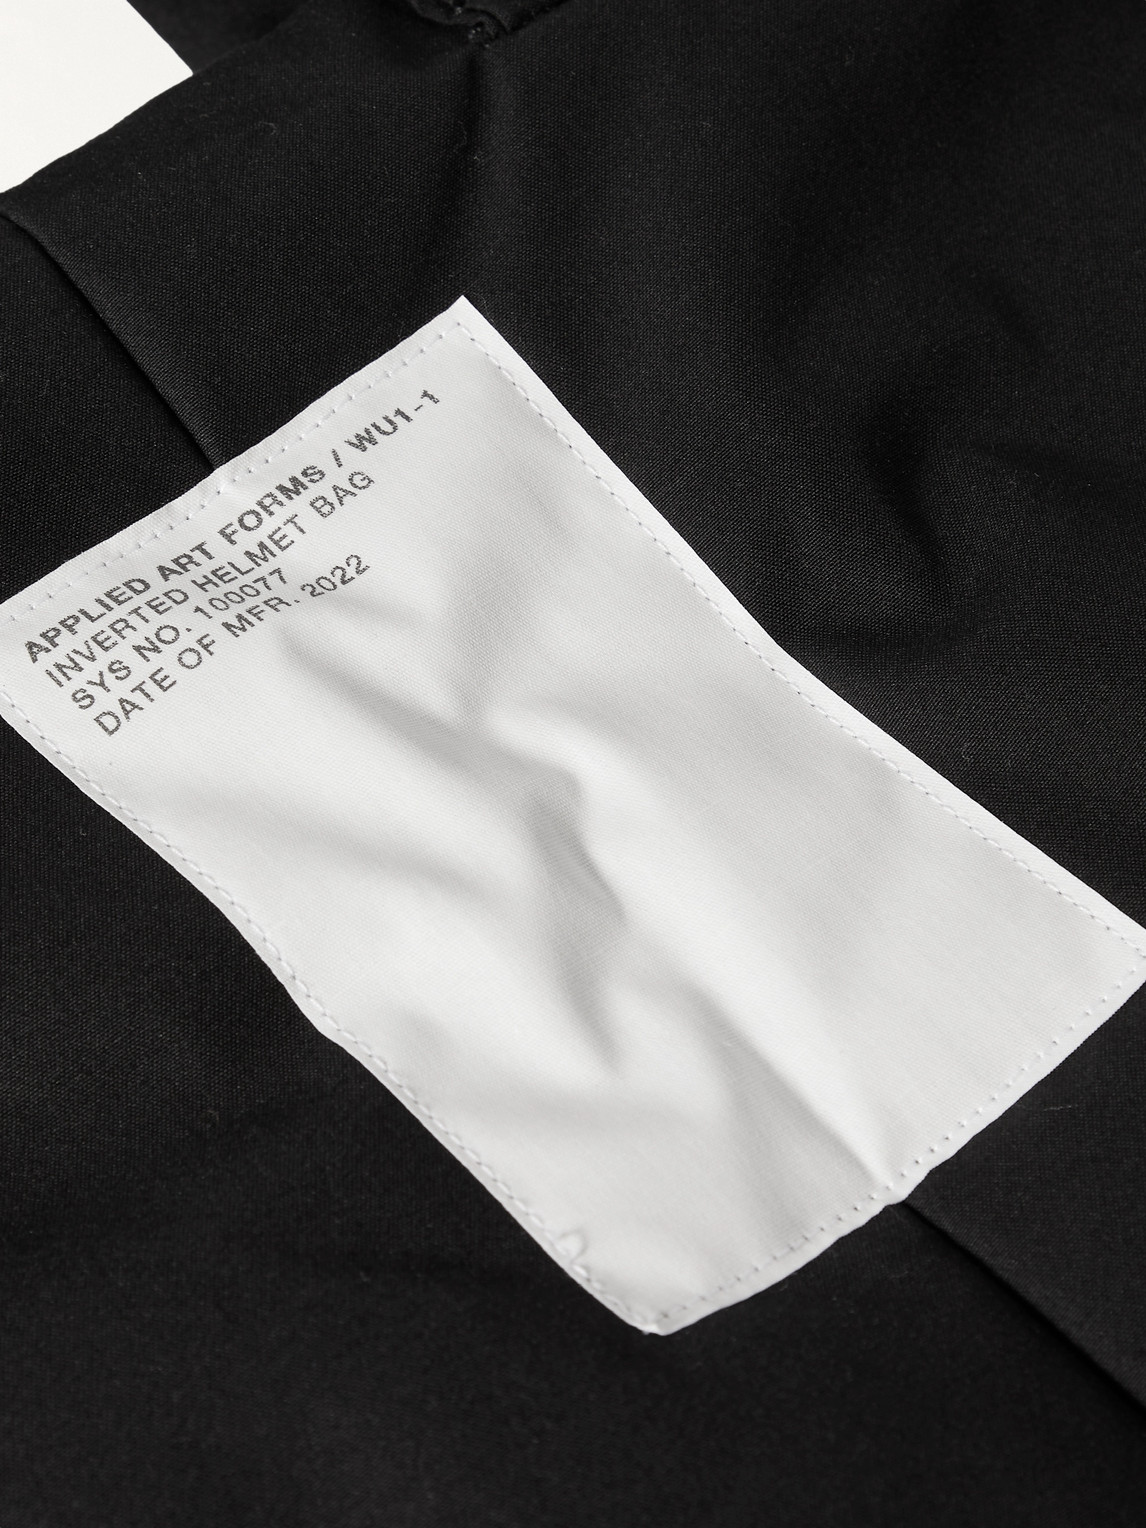 Shop Applied Art Forms Wu1-1 Logo-appliquéd Cotton Tote Bag In Black